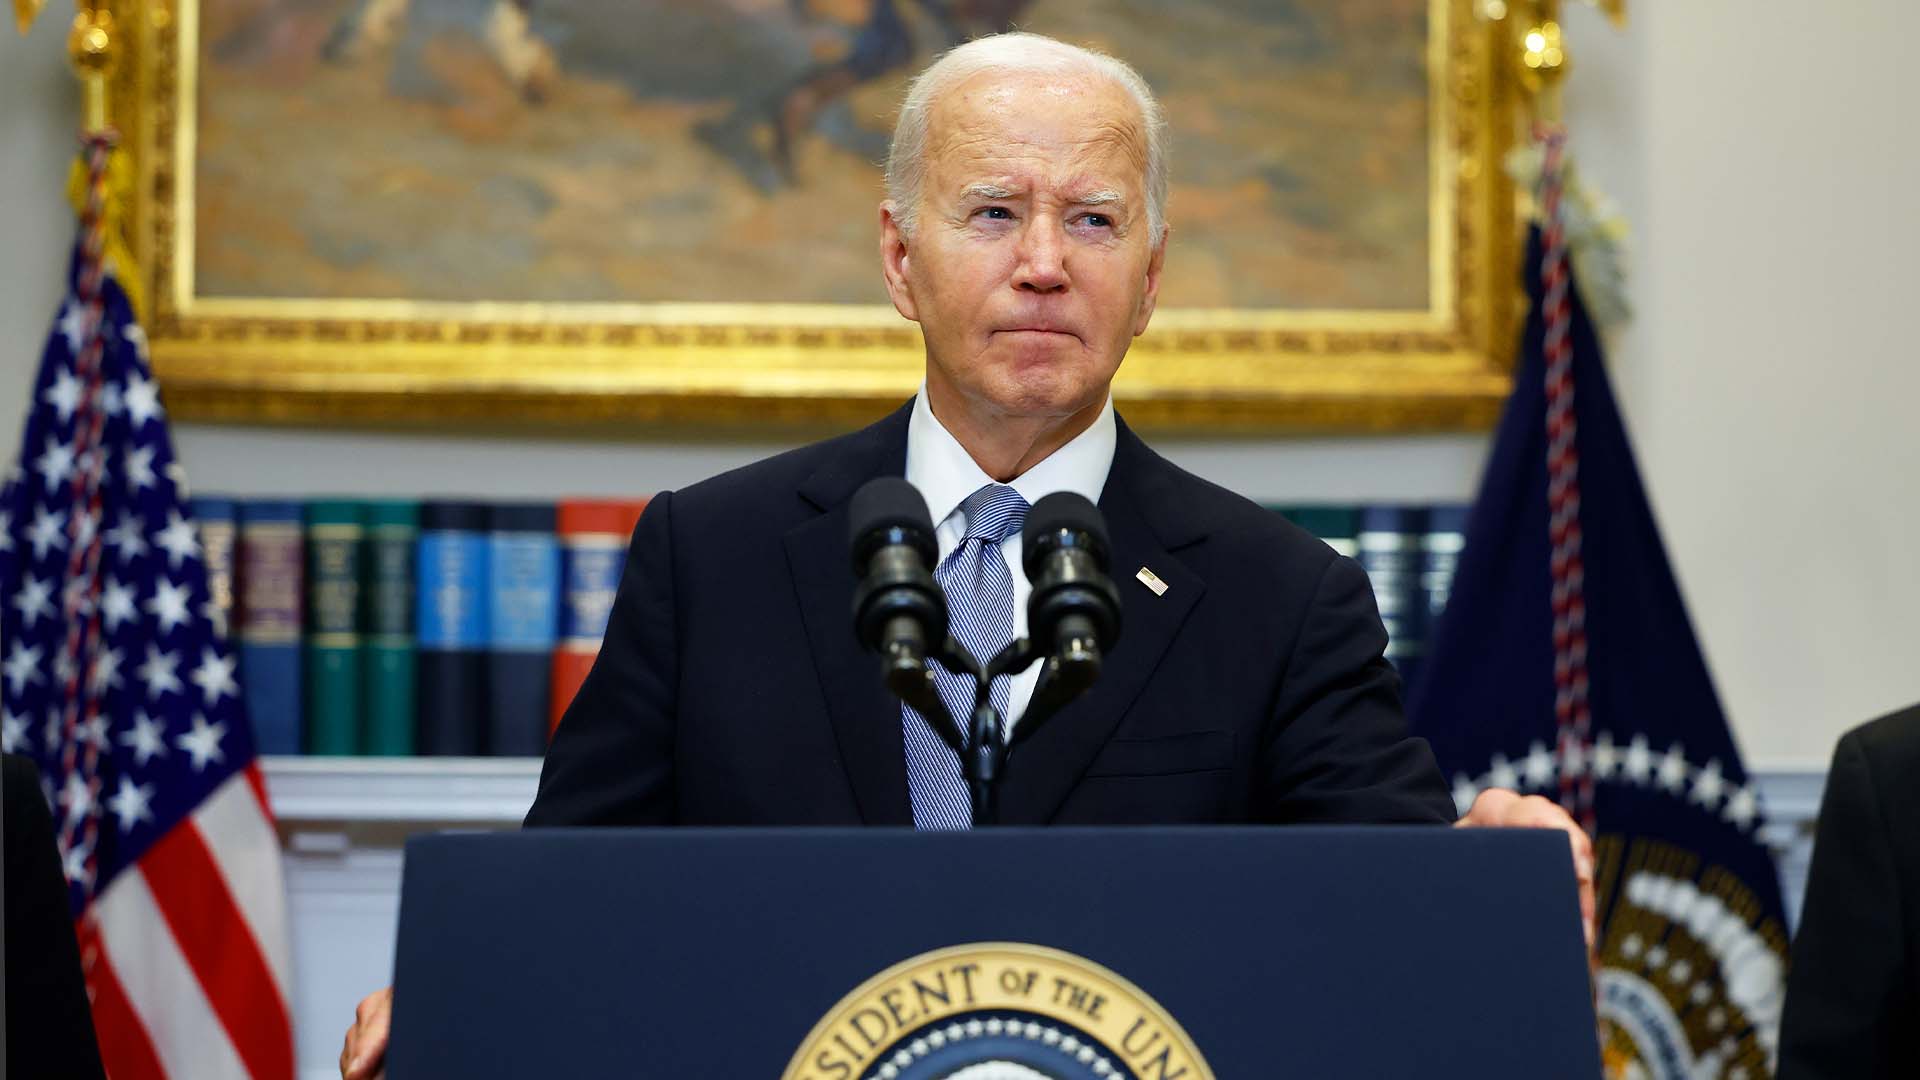 President Biden stands in front of podium